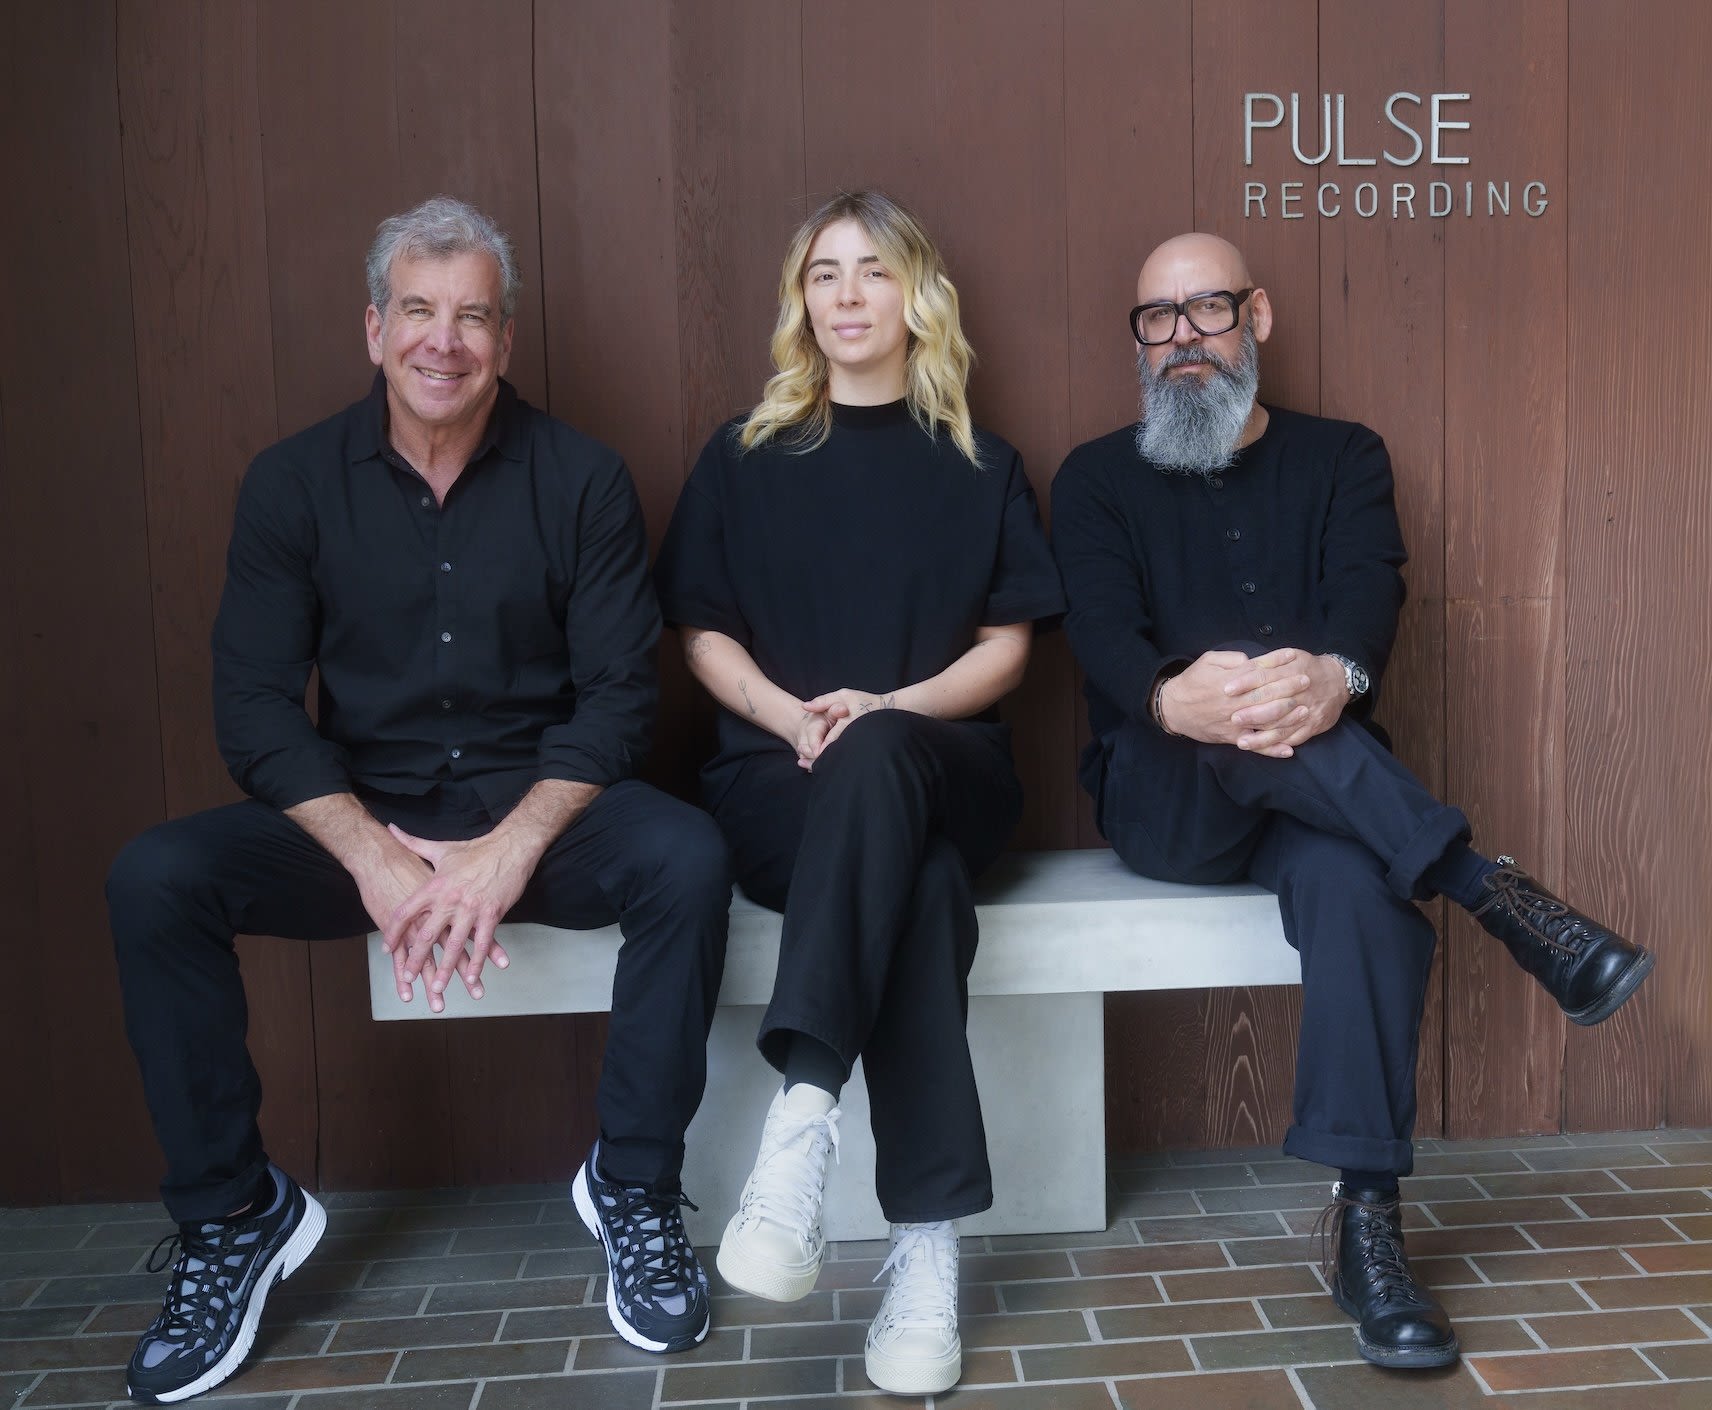 PULSE Records’ Josh Abraham and Scott Cutler talk artist development and Tommy Richman’s viral hit MILLION DOLLAR BABY